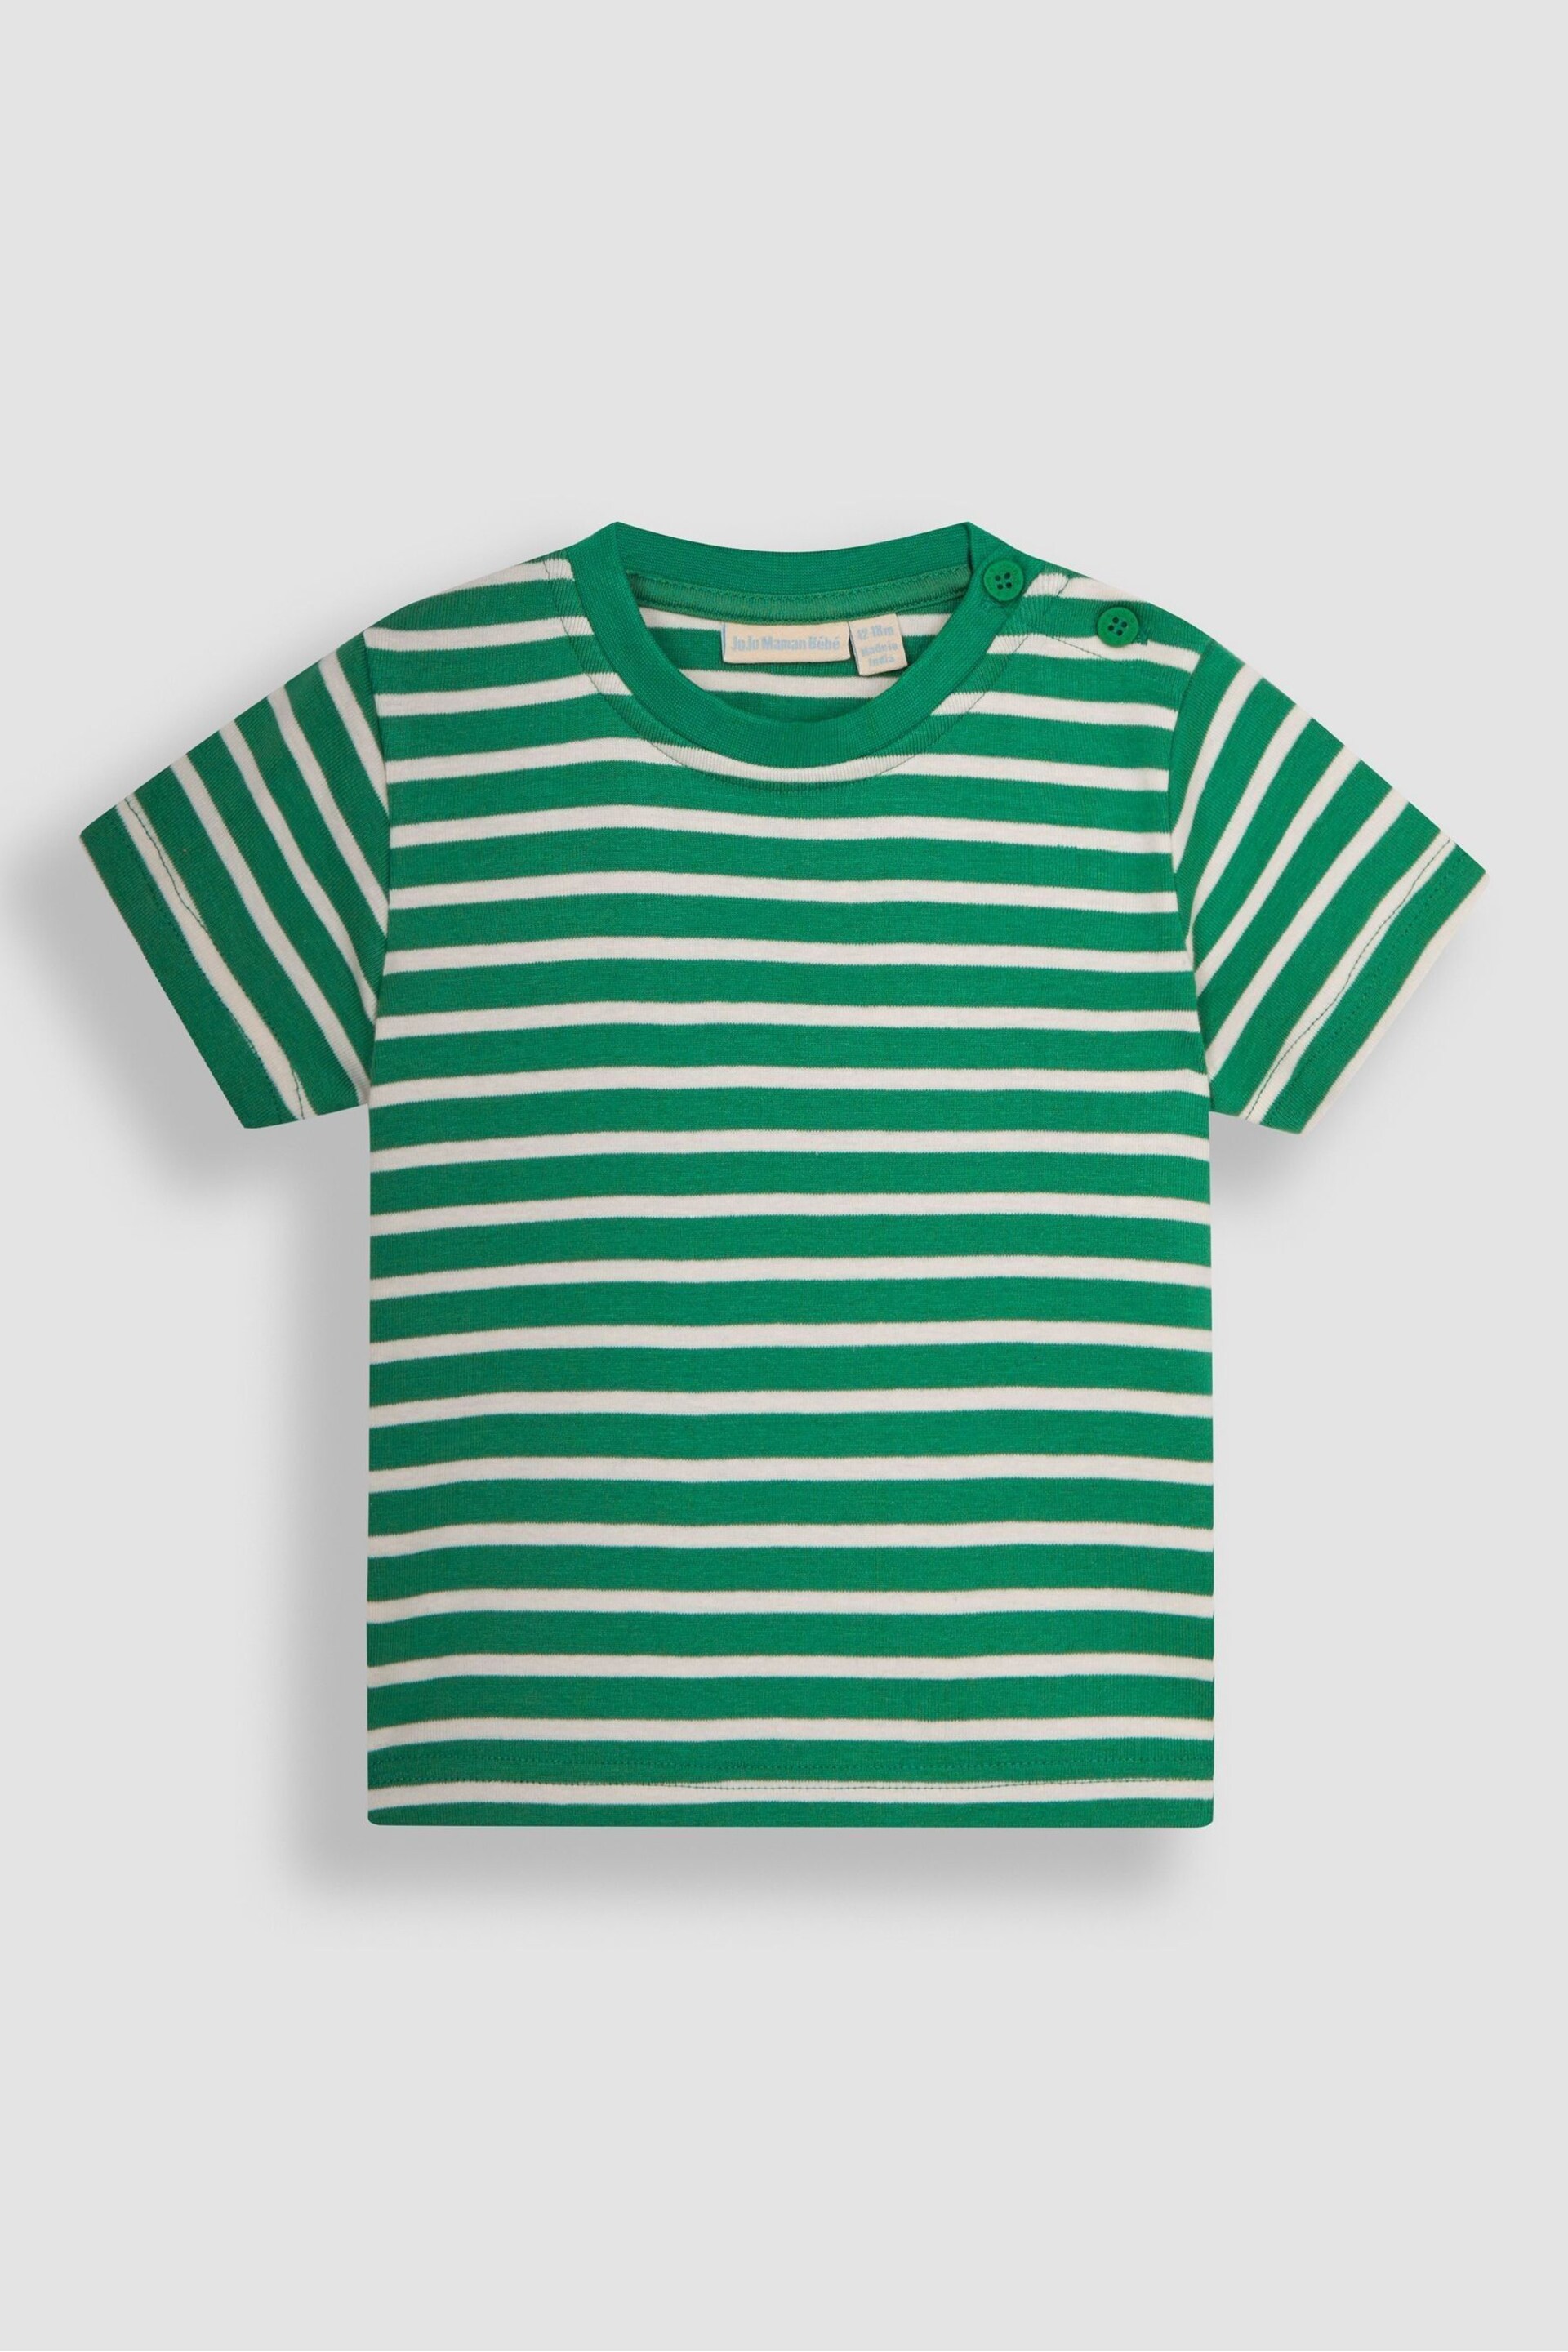 JoJo Maman Bébé Green Stripe T-Shirt - Image 2 of 4